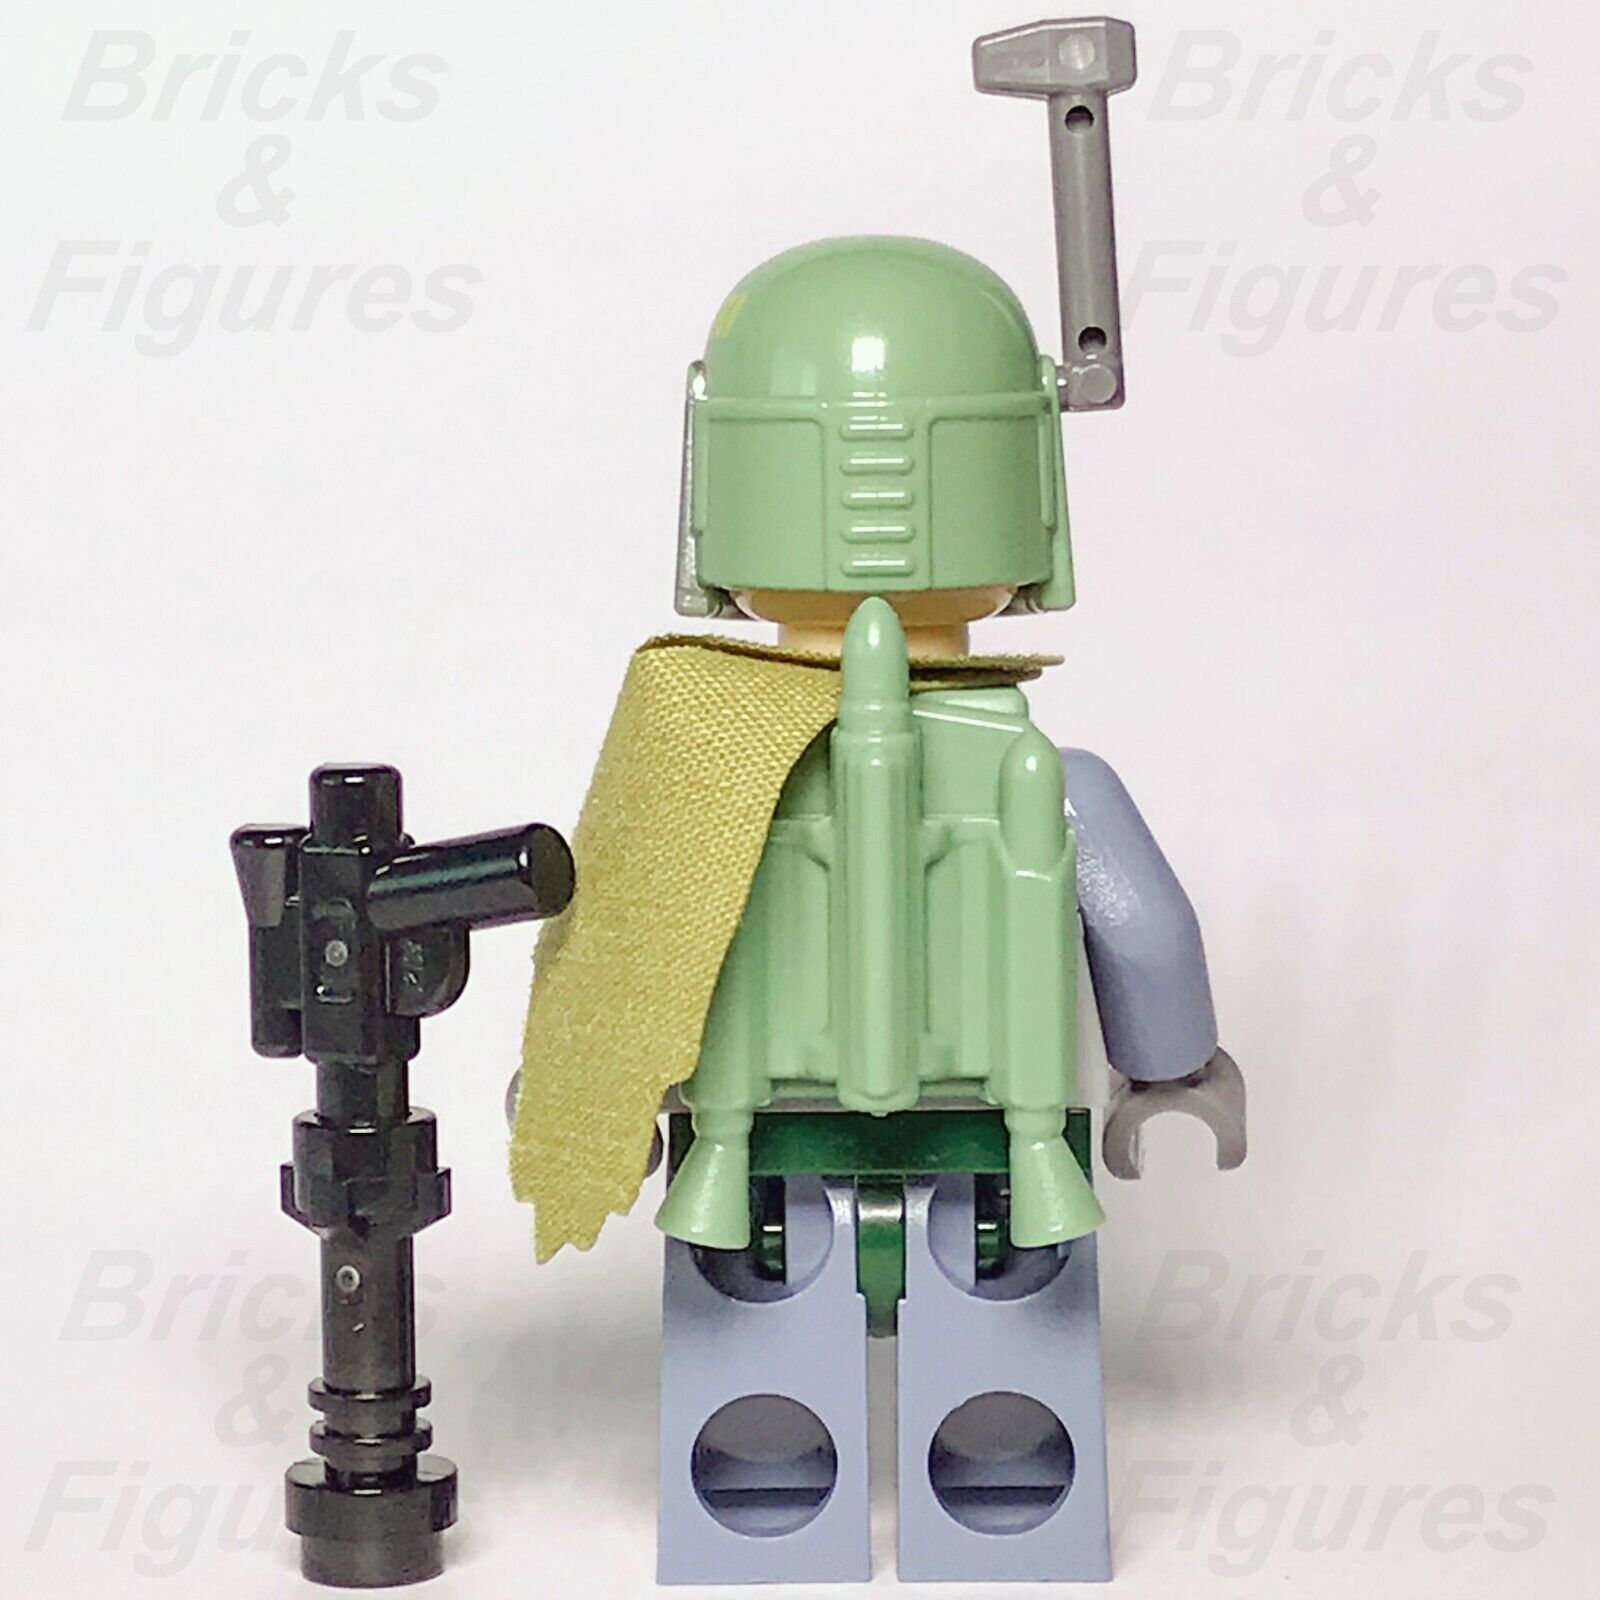 LEGO Star Wars Boba Fett Minifigure Mandalorian Bounty Hunter 9496 sw0396 4